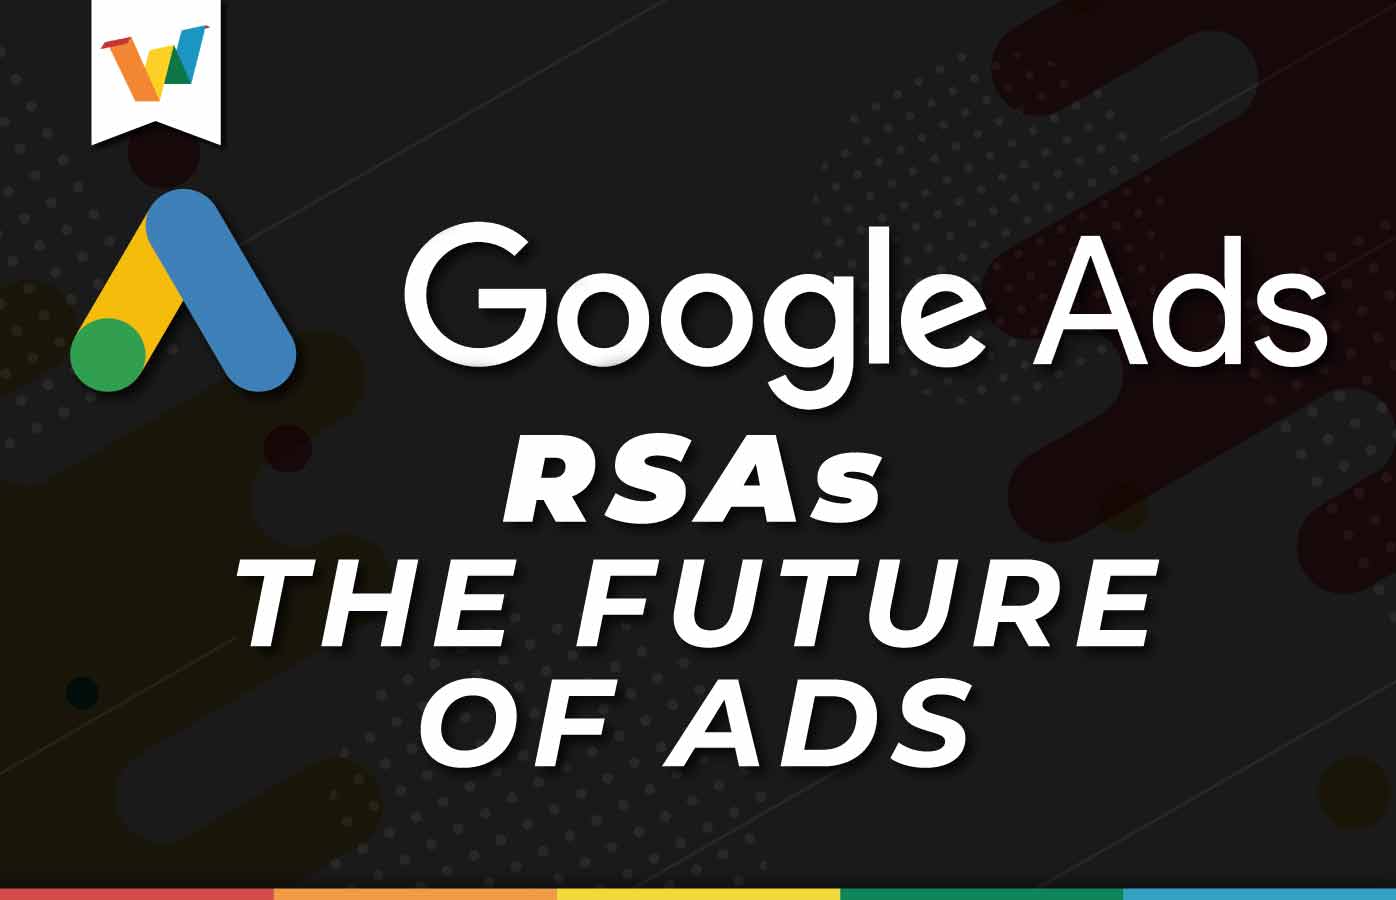 RSAs, the future of ads